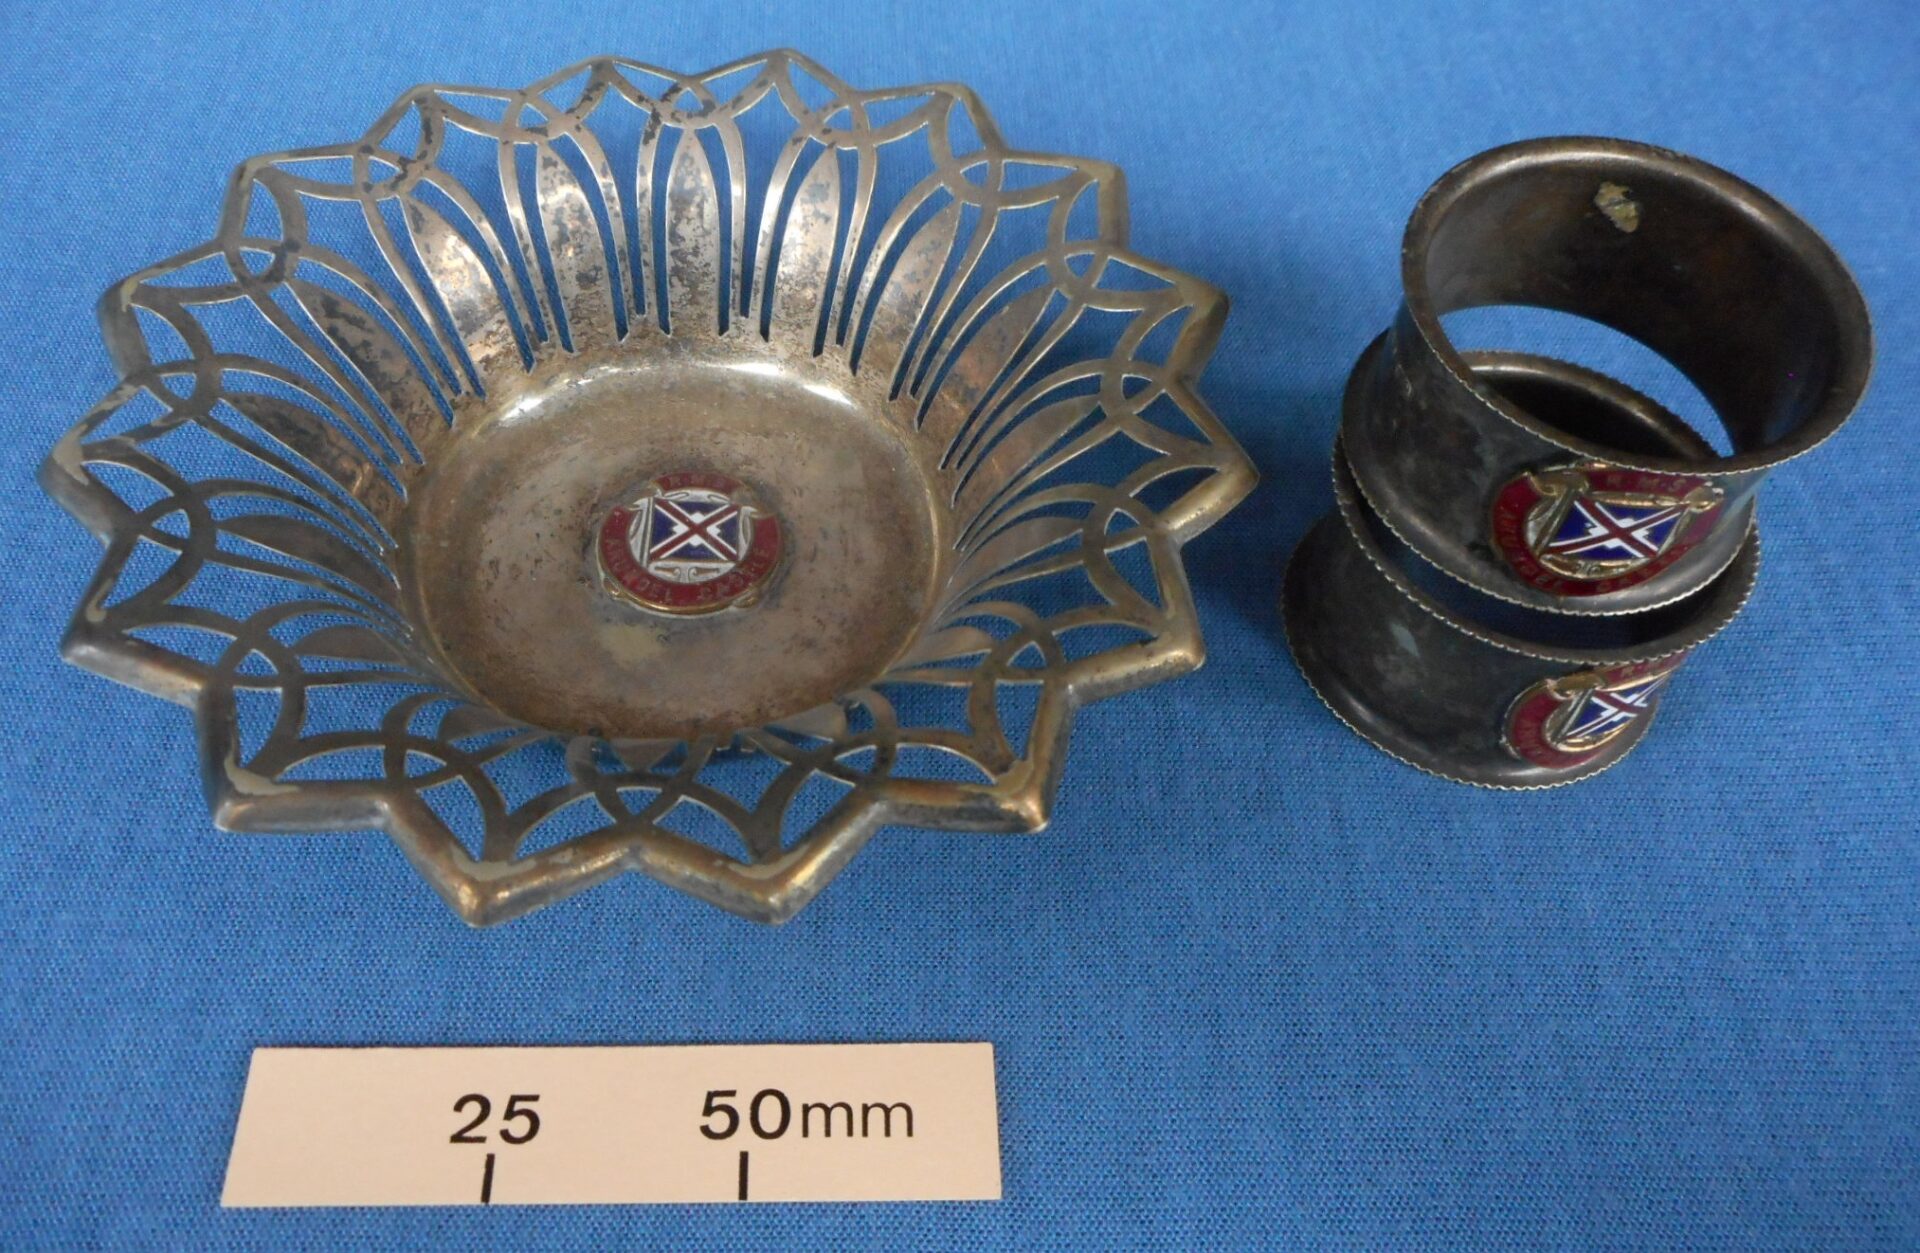 Souvenirs from R.M.S. Arundel Castle